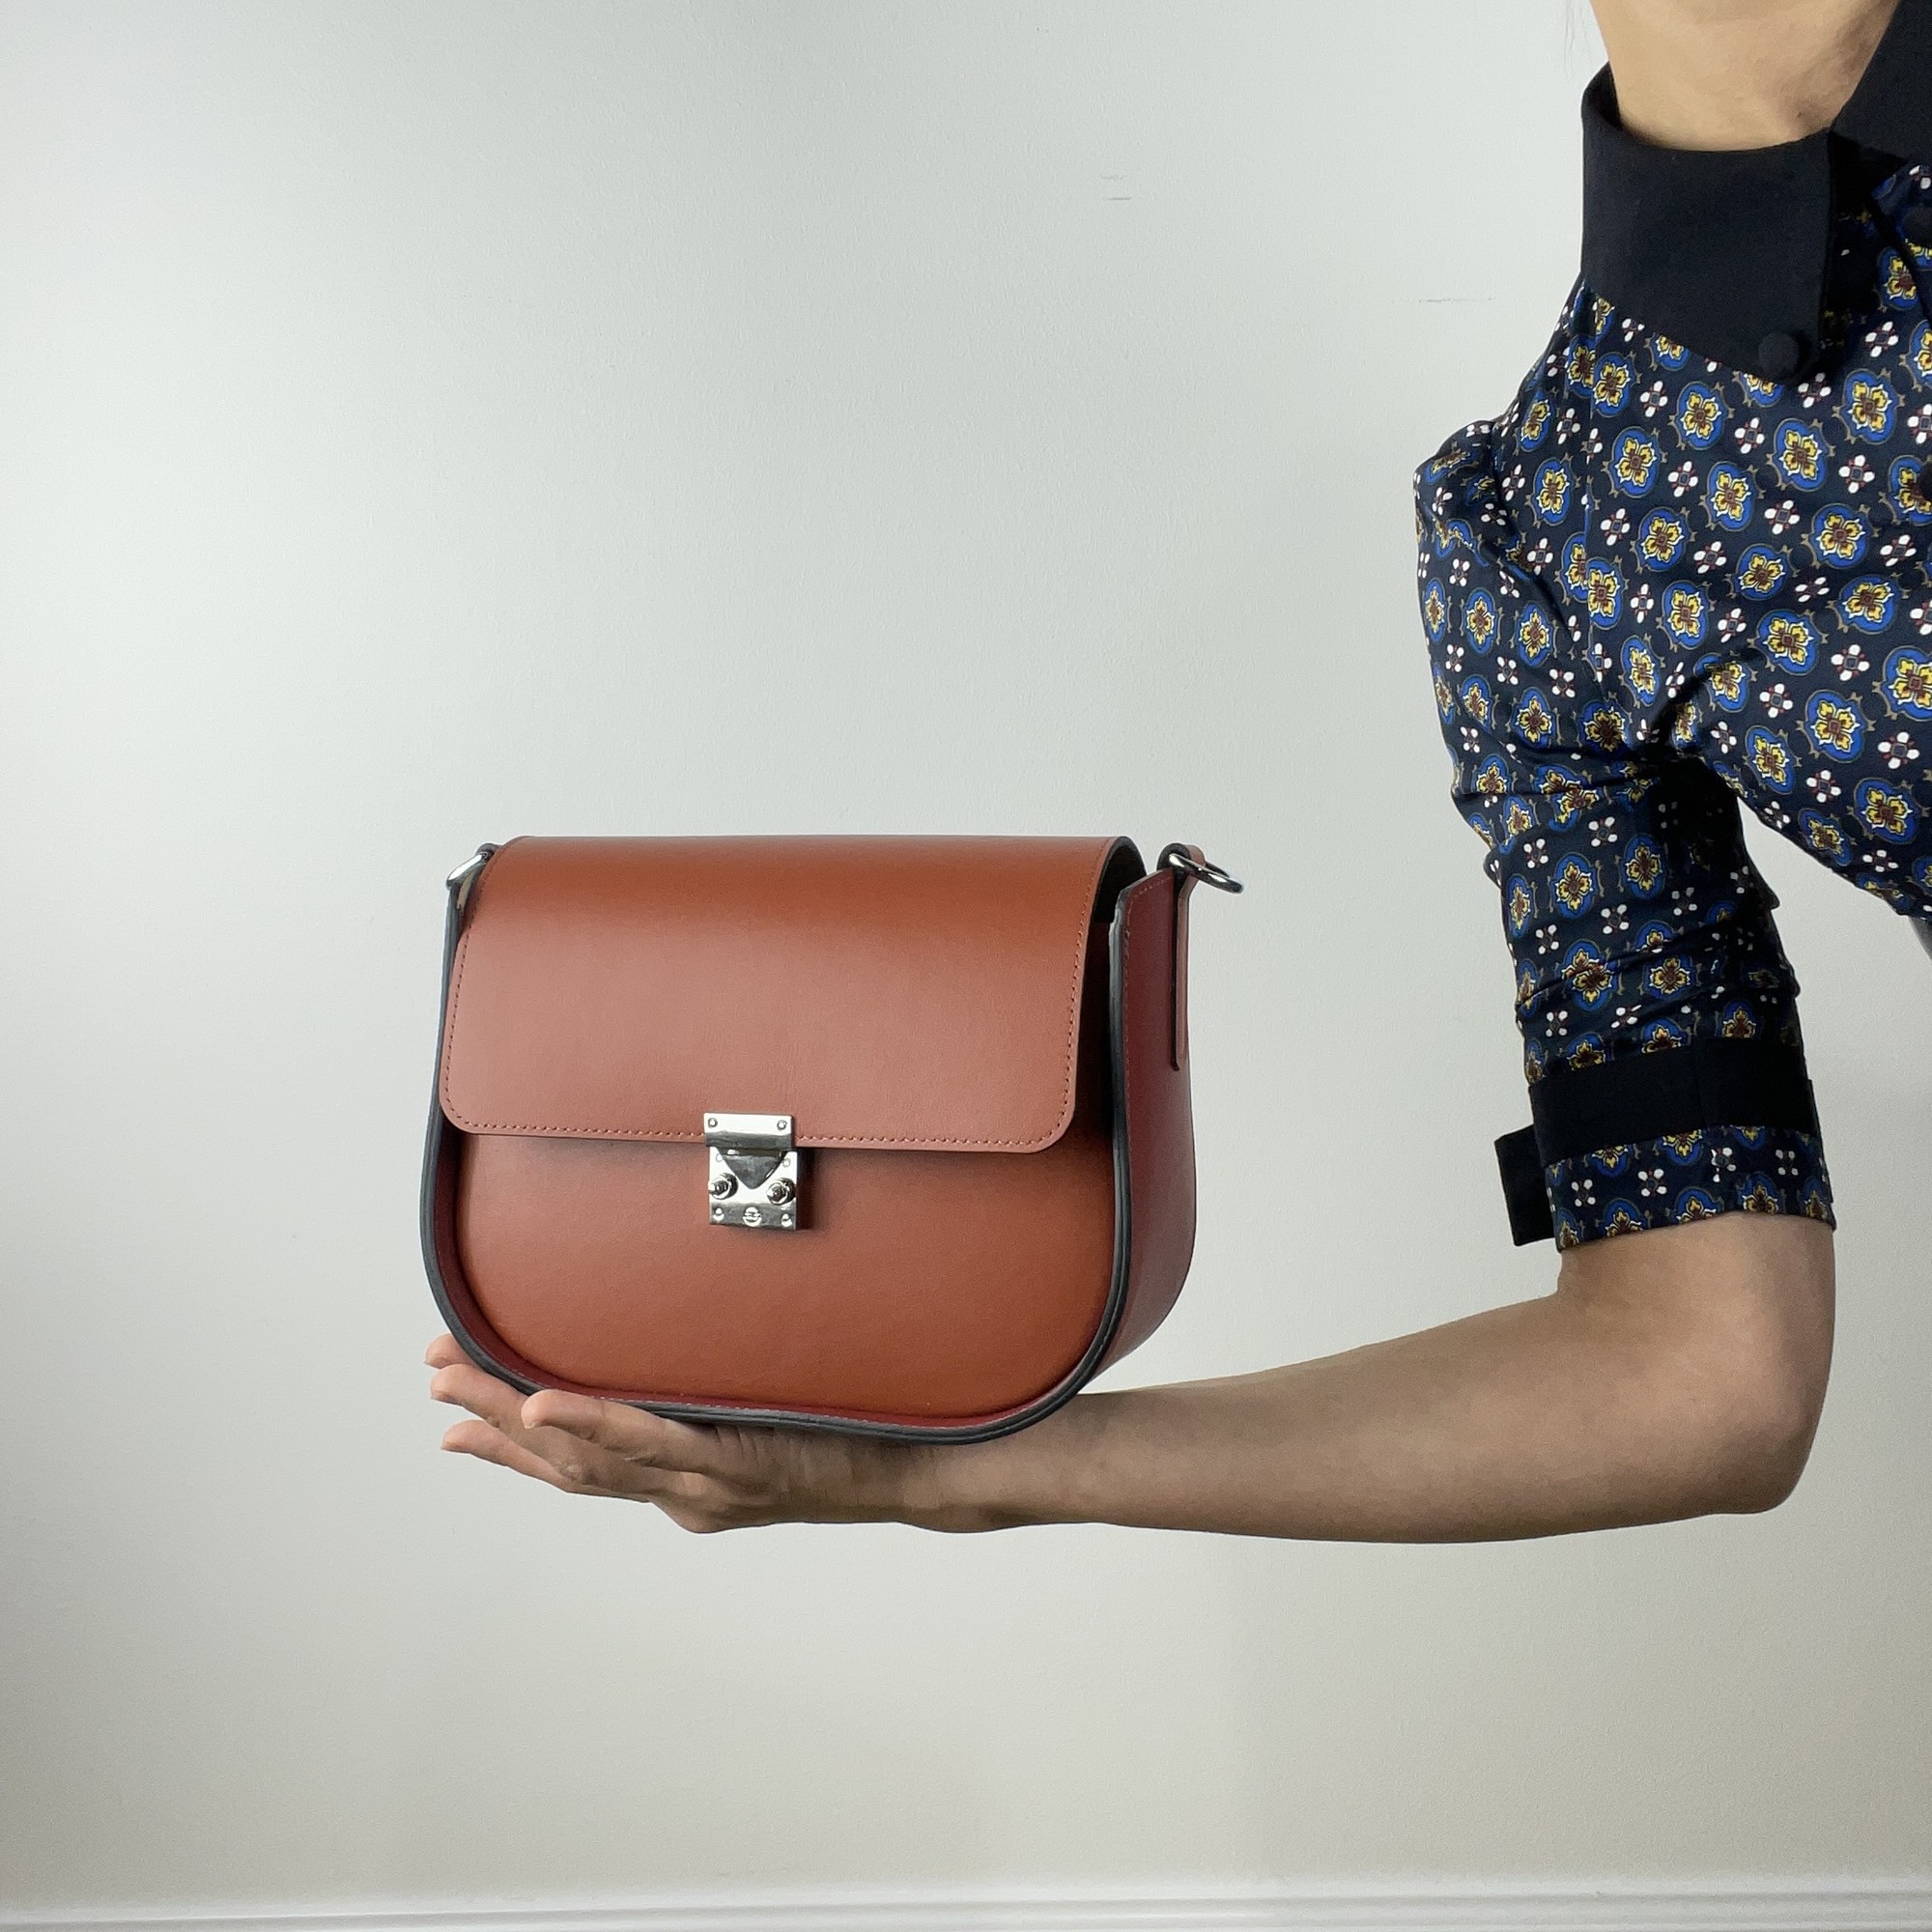 Leather Handbag for Woman, Crossbody Bag, Leather Purse, Shoulder Bag, Lamponi Saddle One S